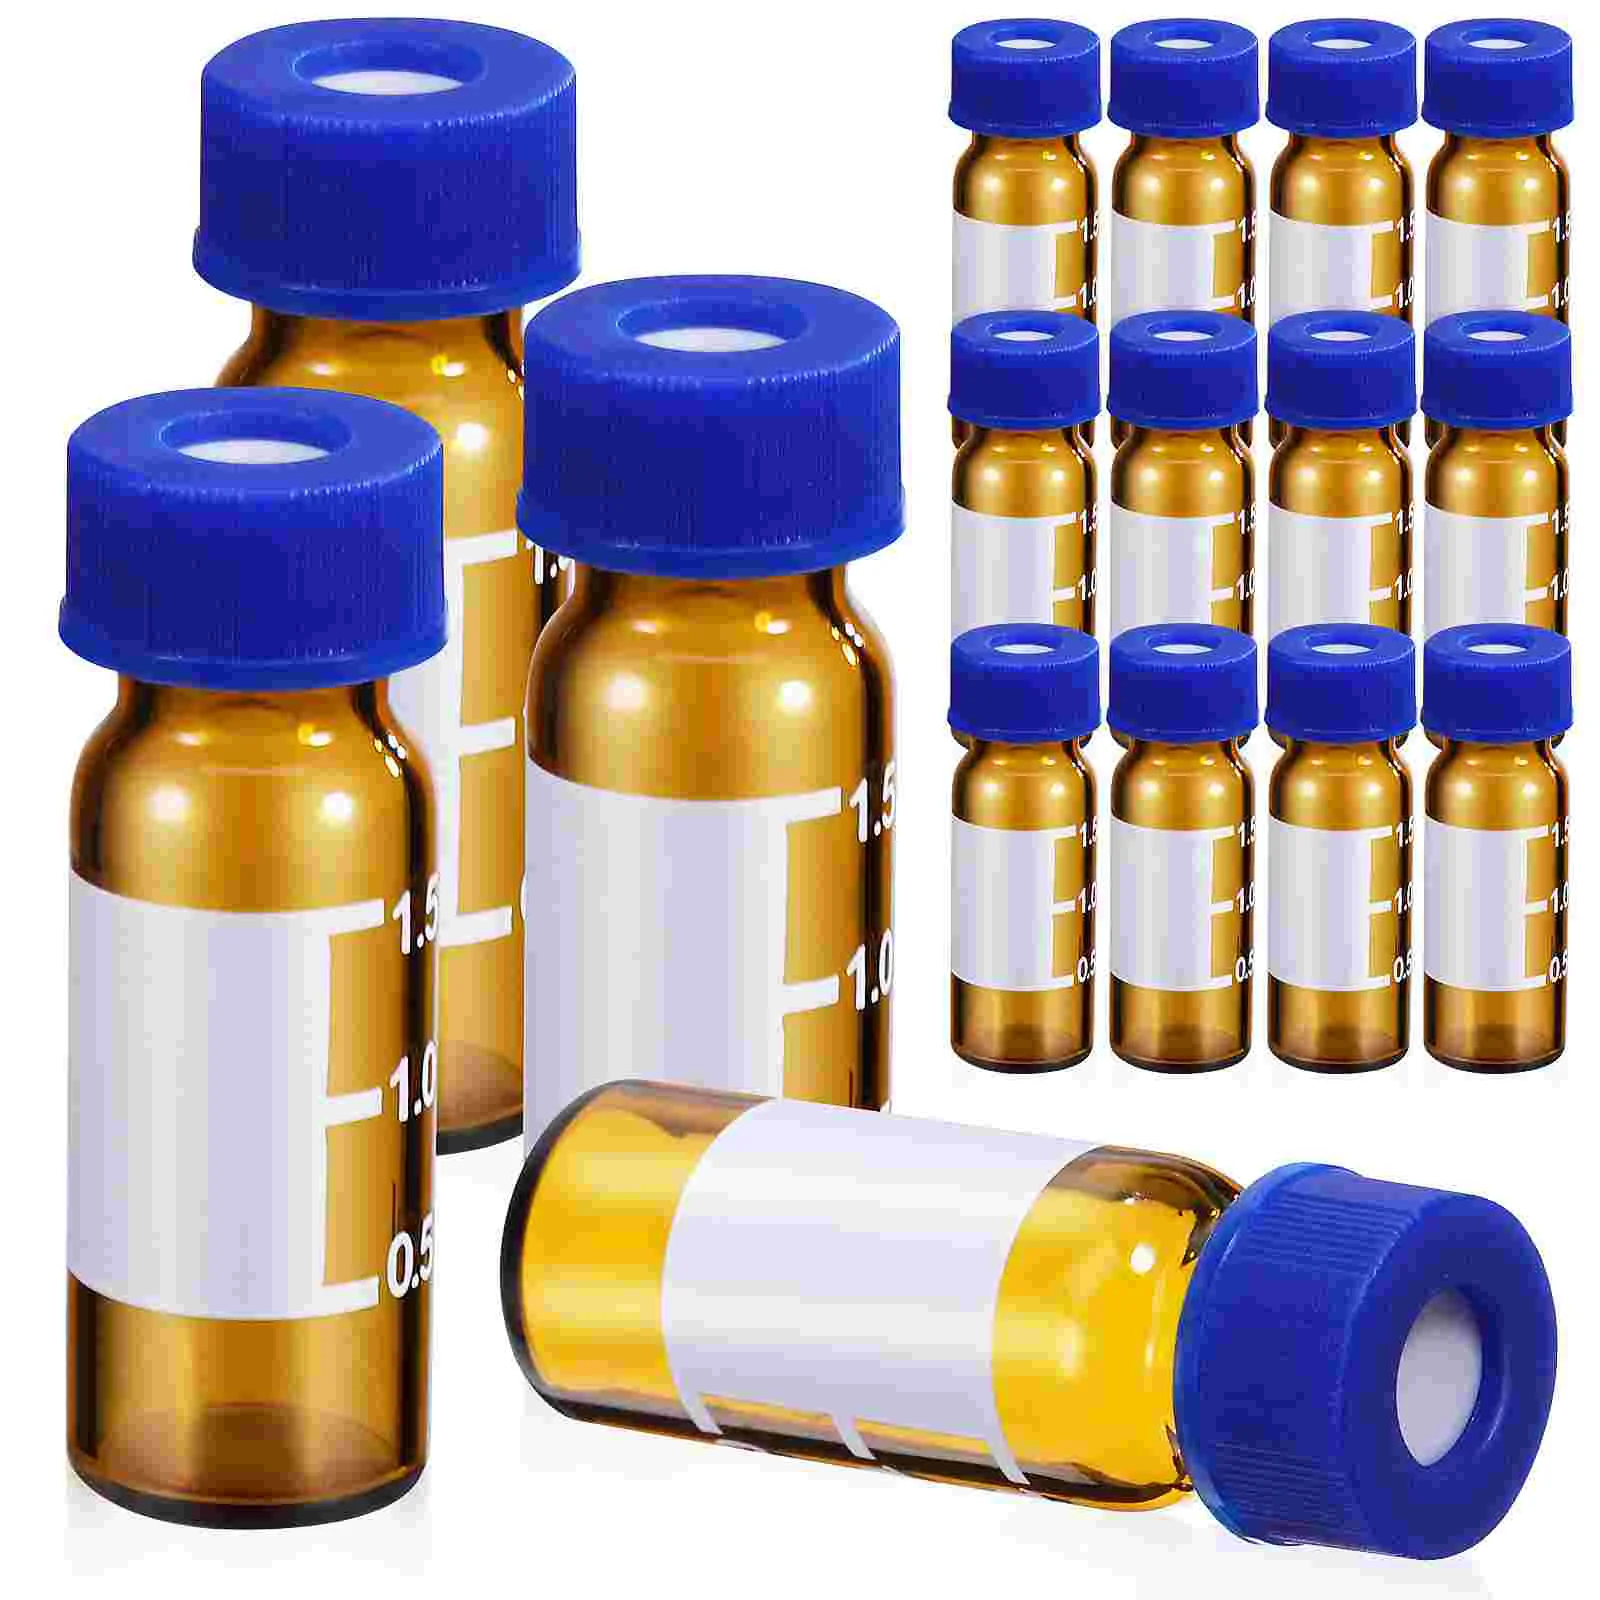 

100 Pcs Vial Little Glass Bottles Sampling Vials 2ml Tiny Jars With Lids Empty Amber